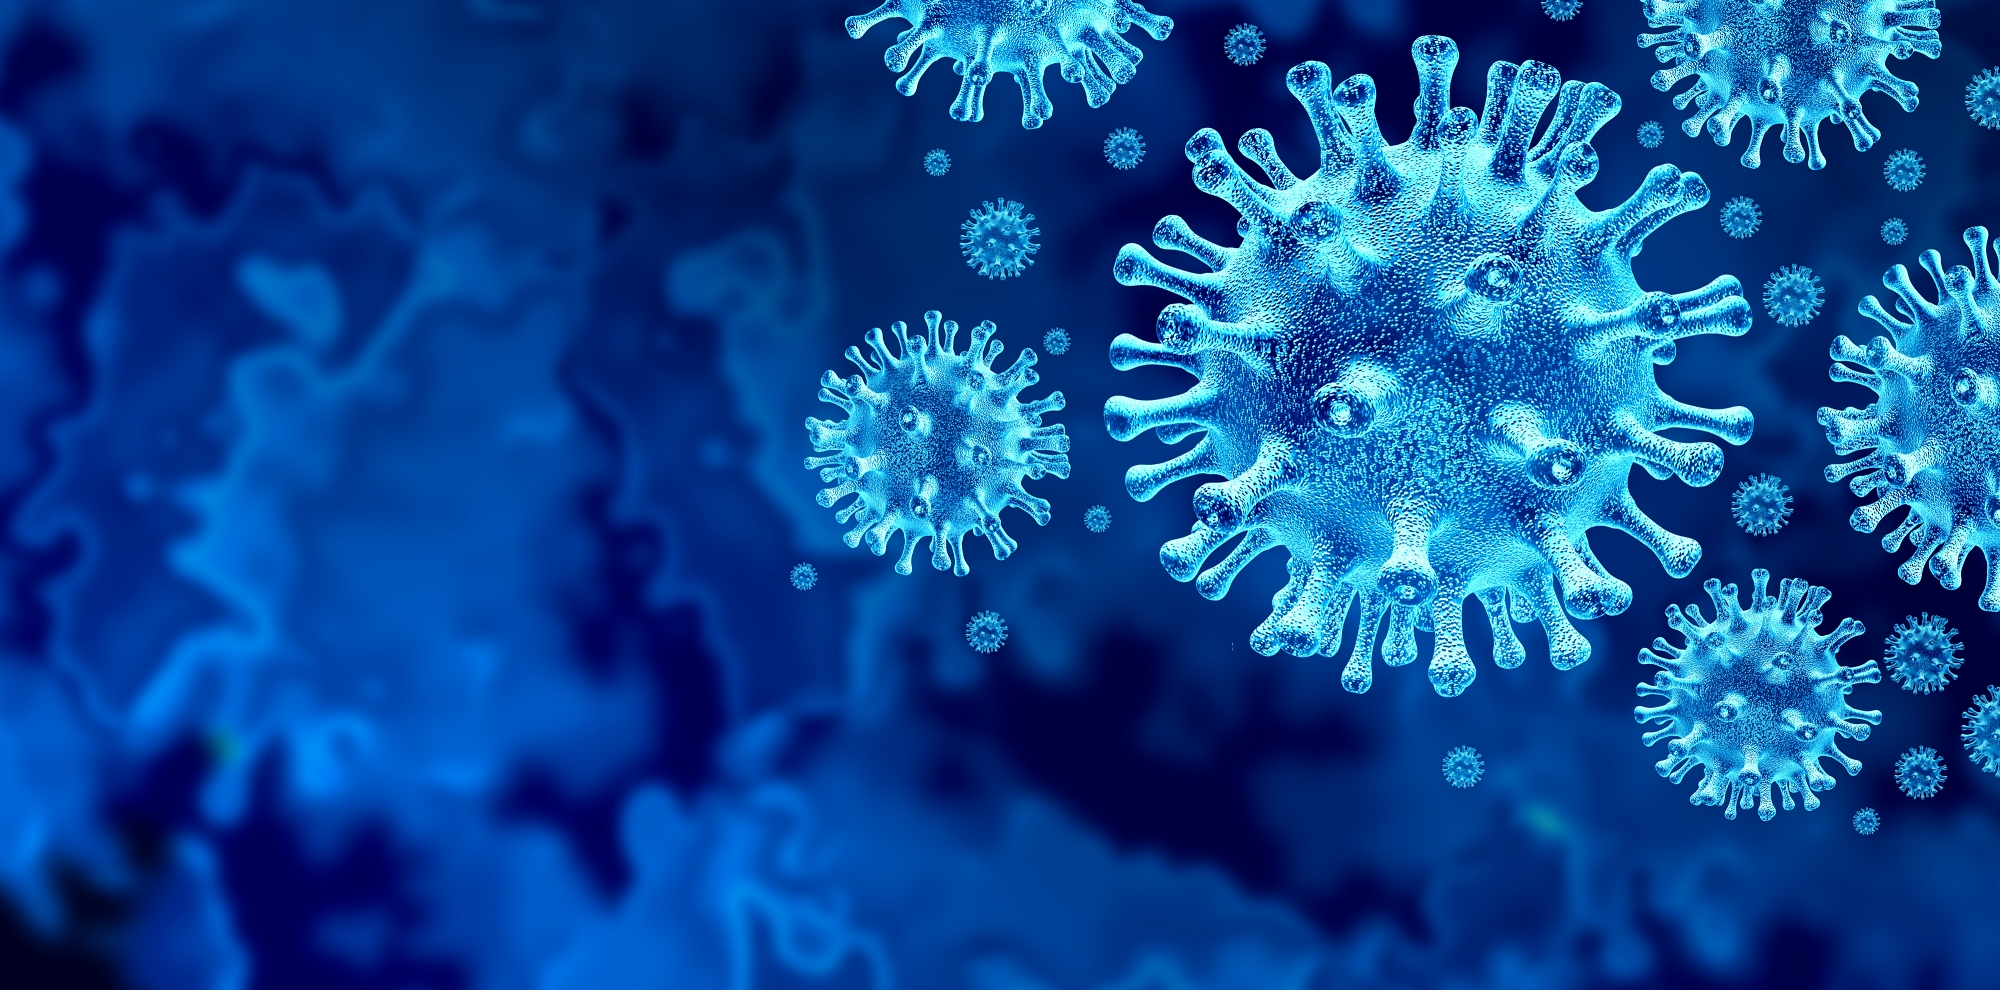 Update on ECPM activities amid the corona virus outbreak